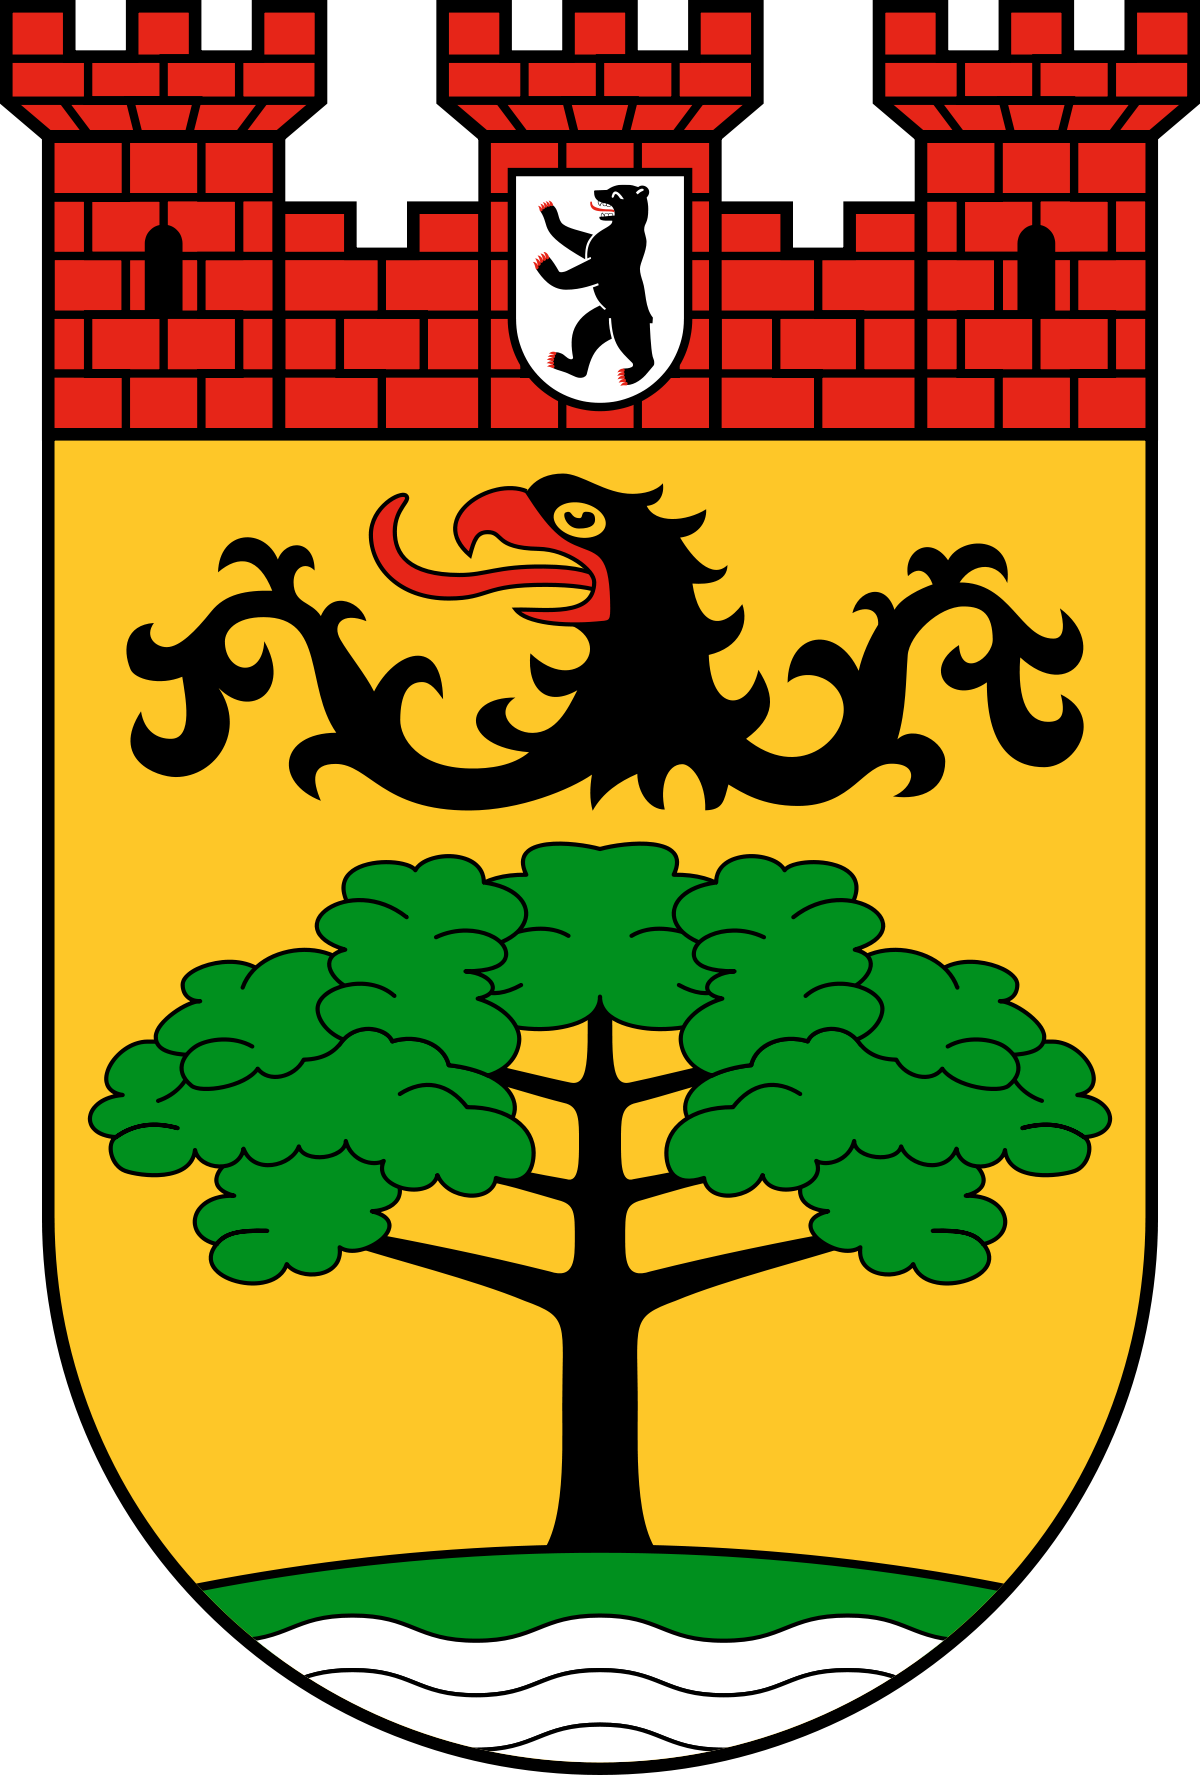 District Parents' Committee (BEA) of the Steglitz-Zehlendorf district